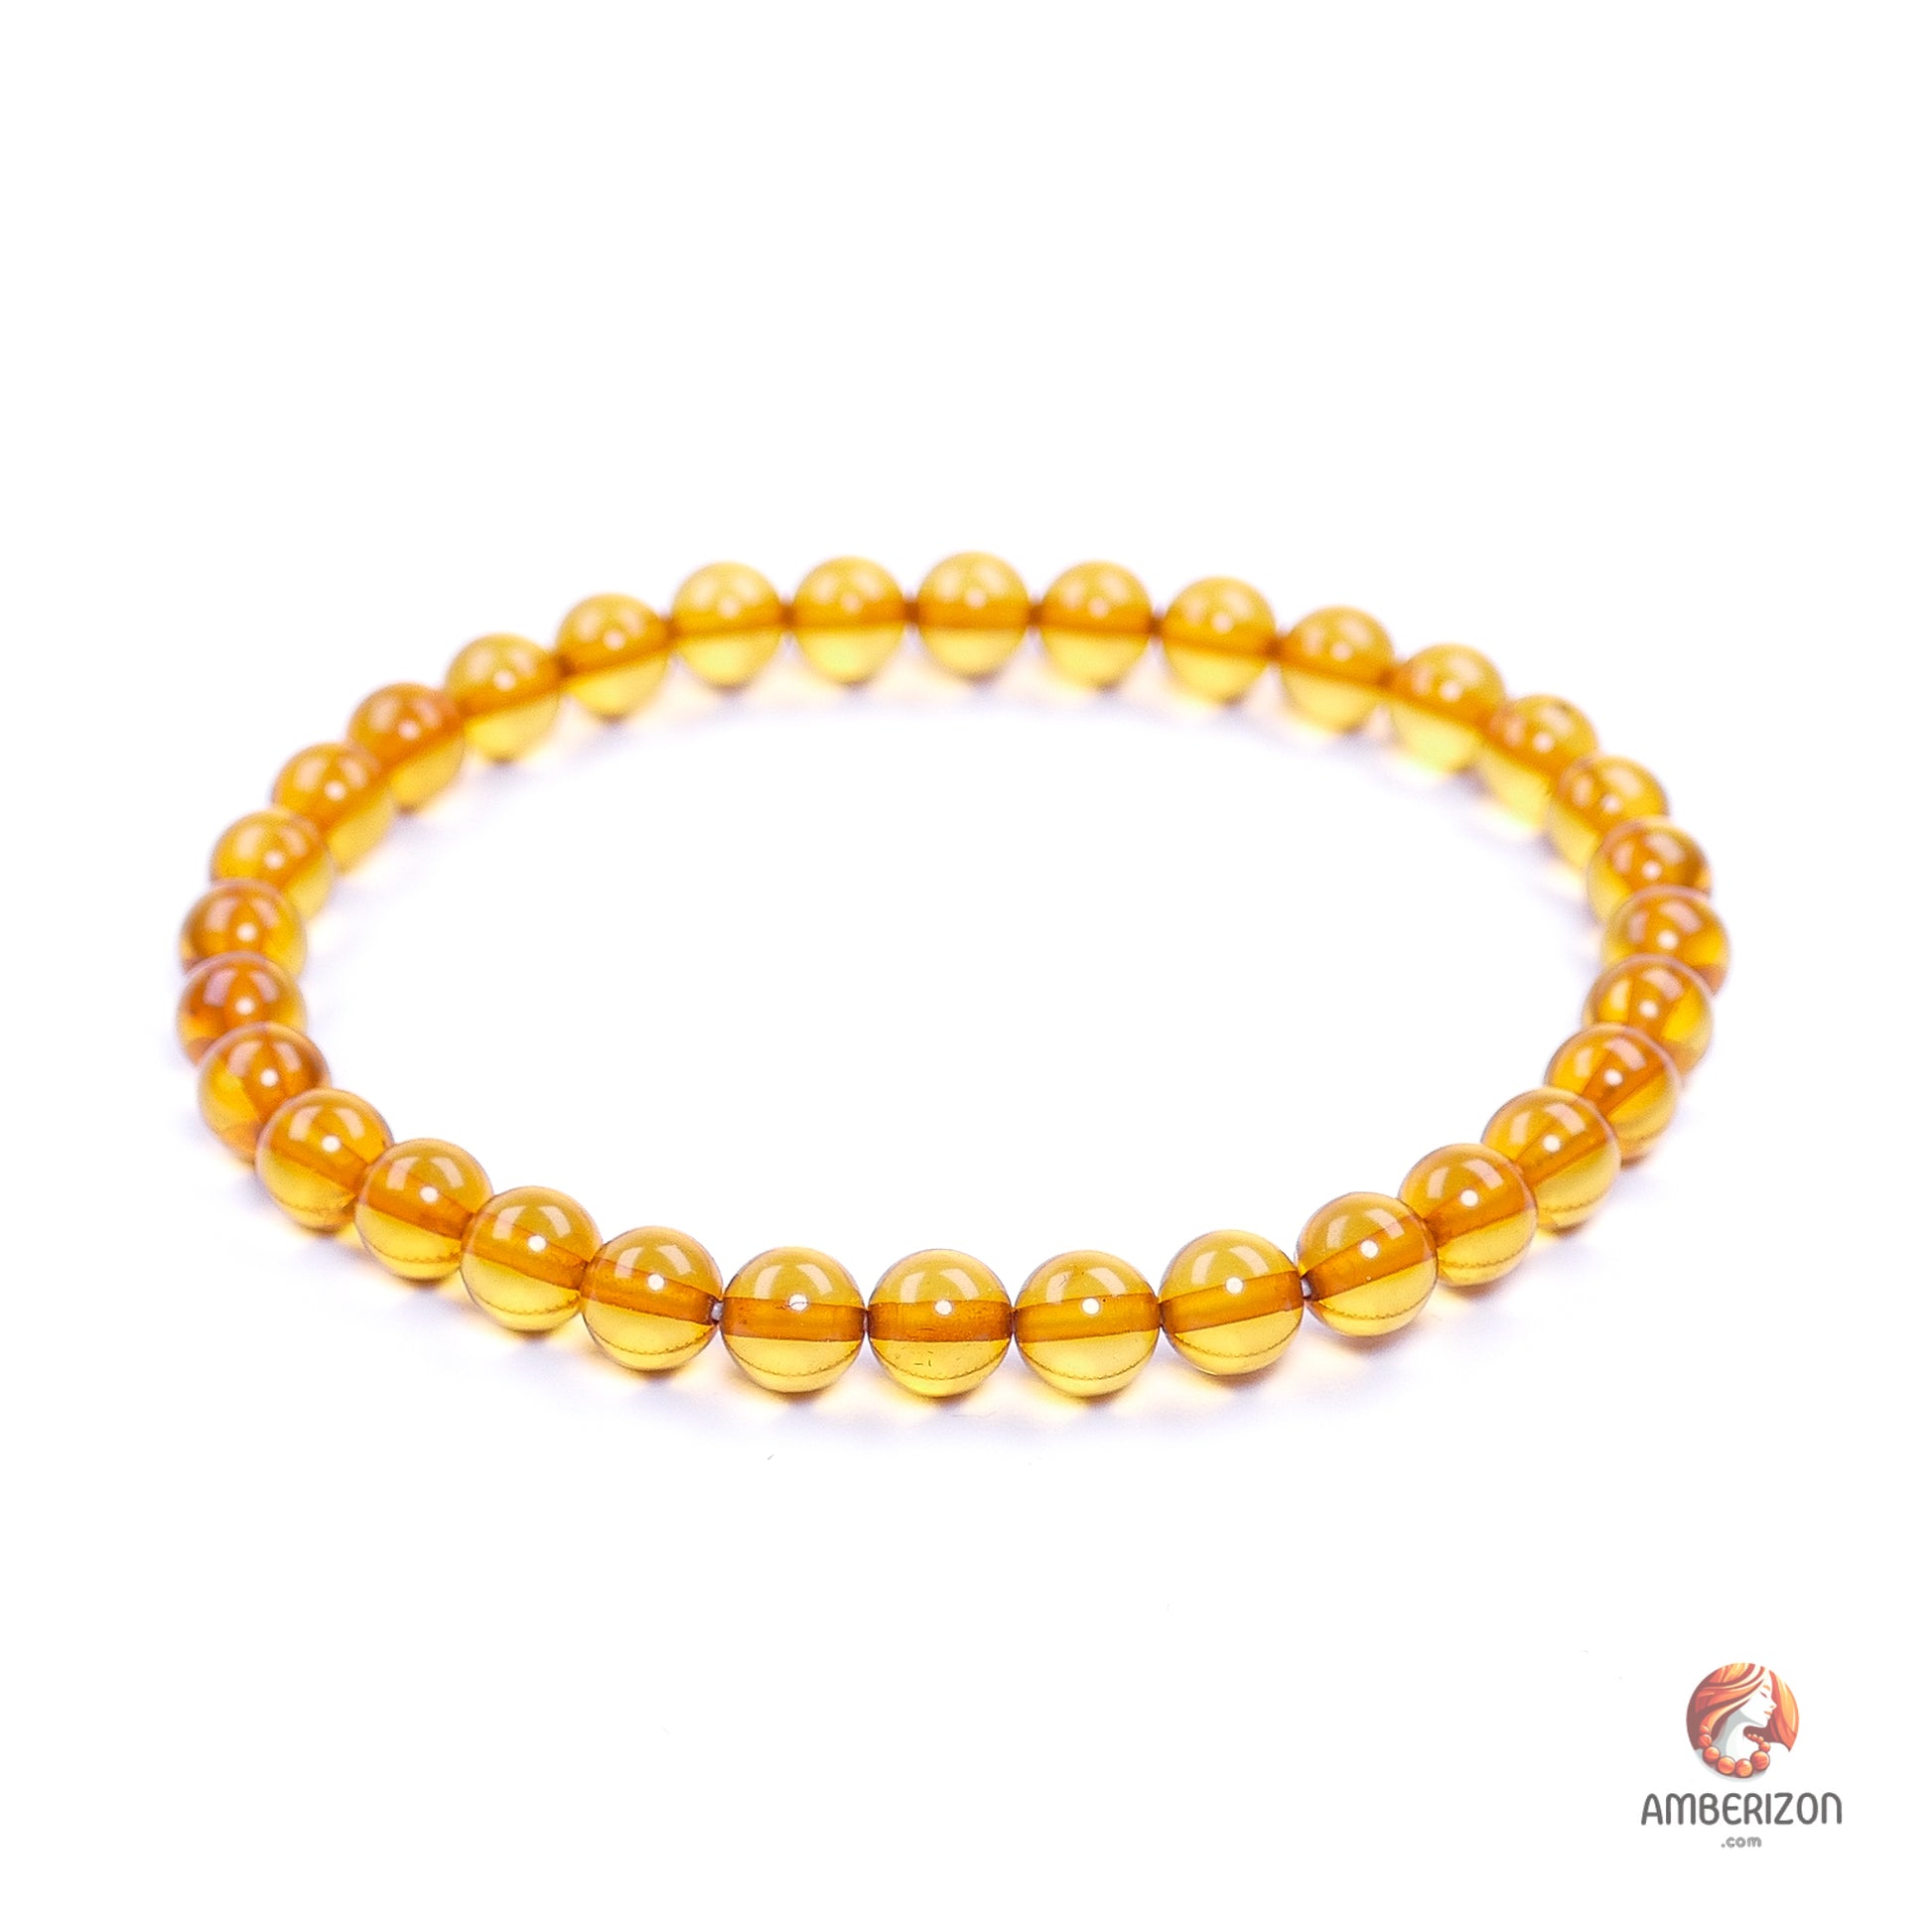 Polished honey amber ball bracelet - Premium AAA quality round beads - Stretchy